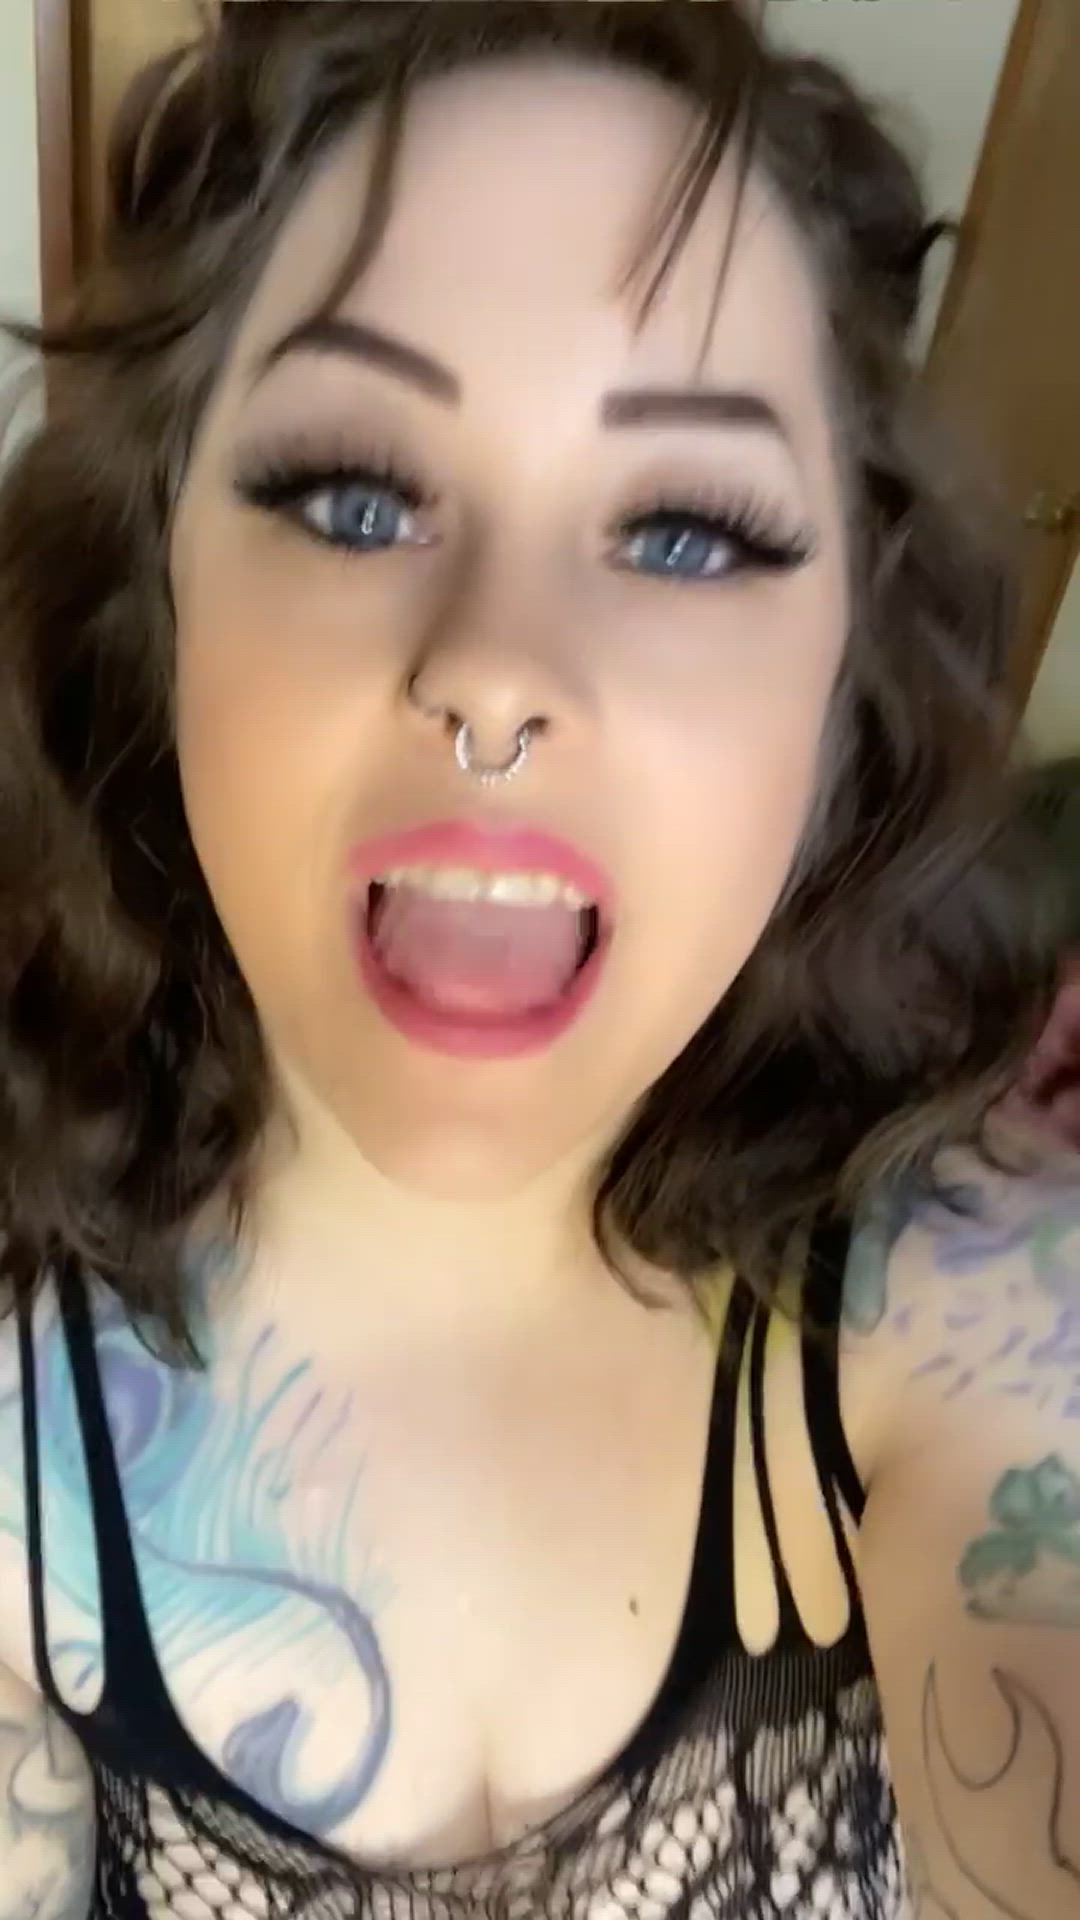 Tits porn video with onlyfans model thattattooedgirl <strong>@thattattooedgirlvip</strong>